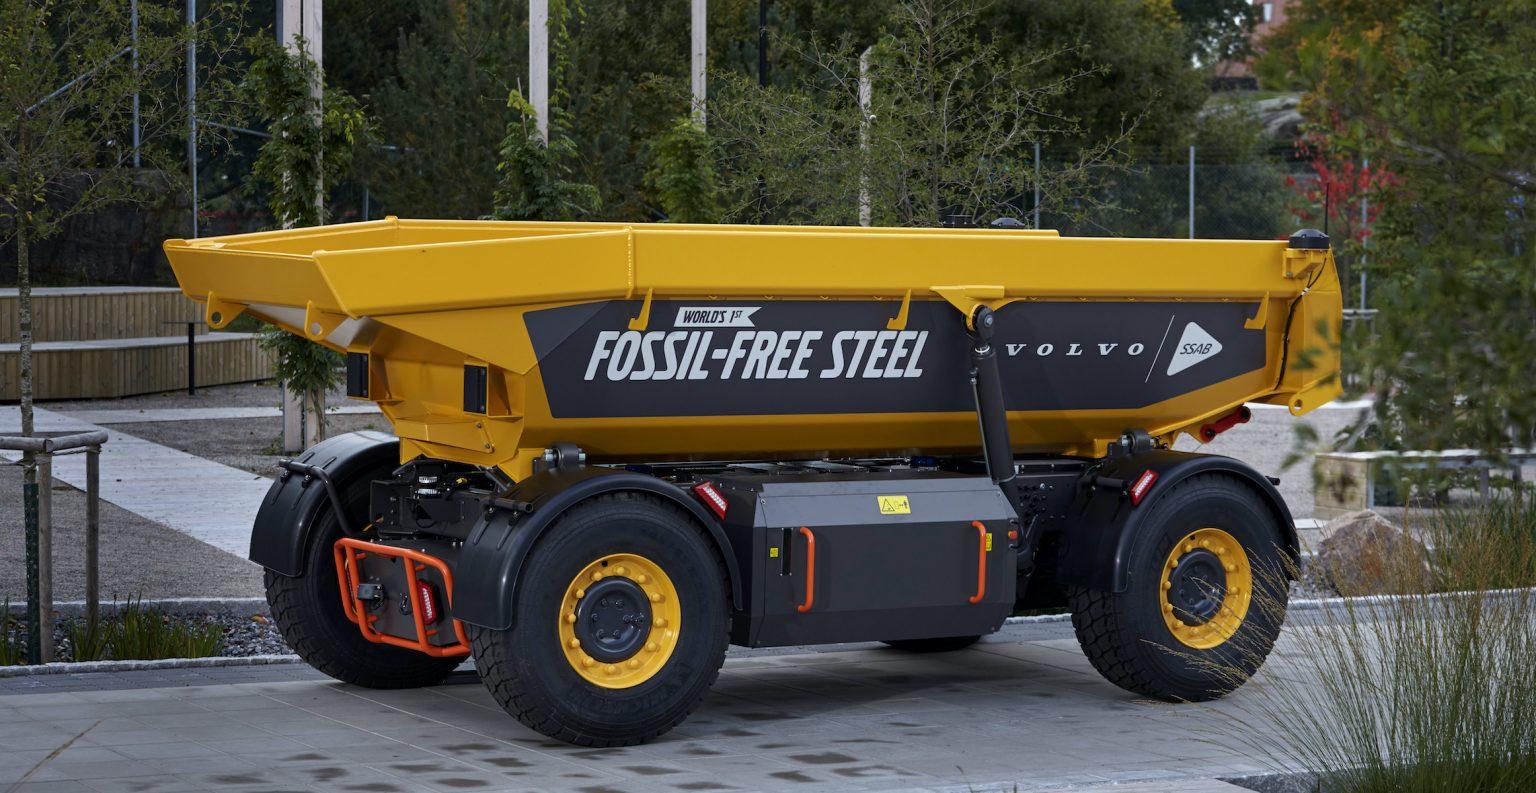 Volvo fossil free steel 1 1536x793